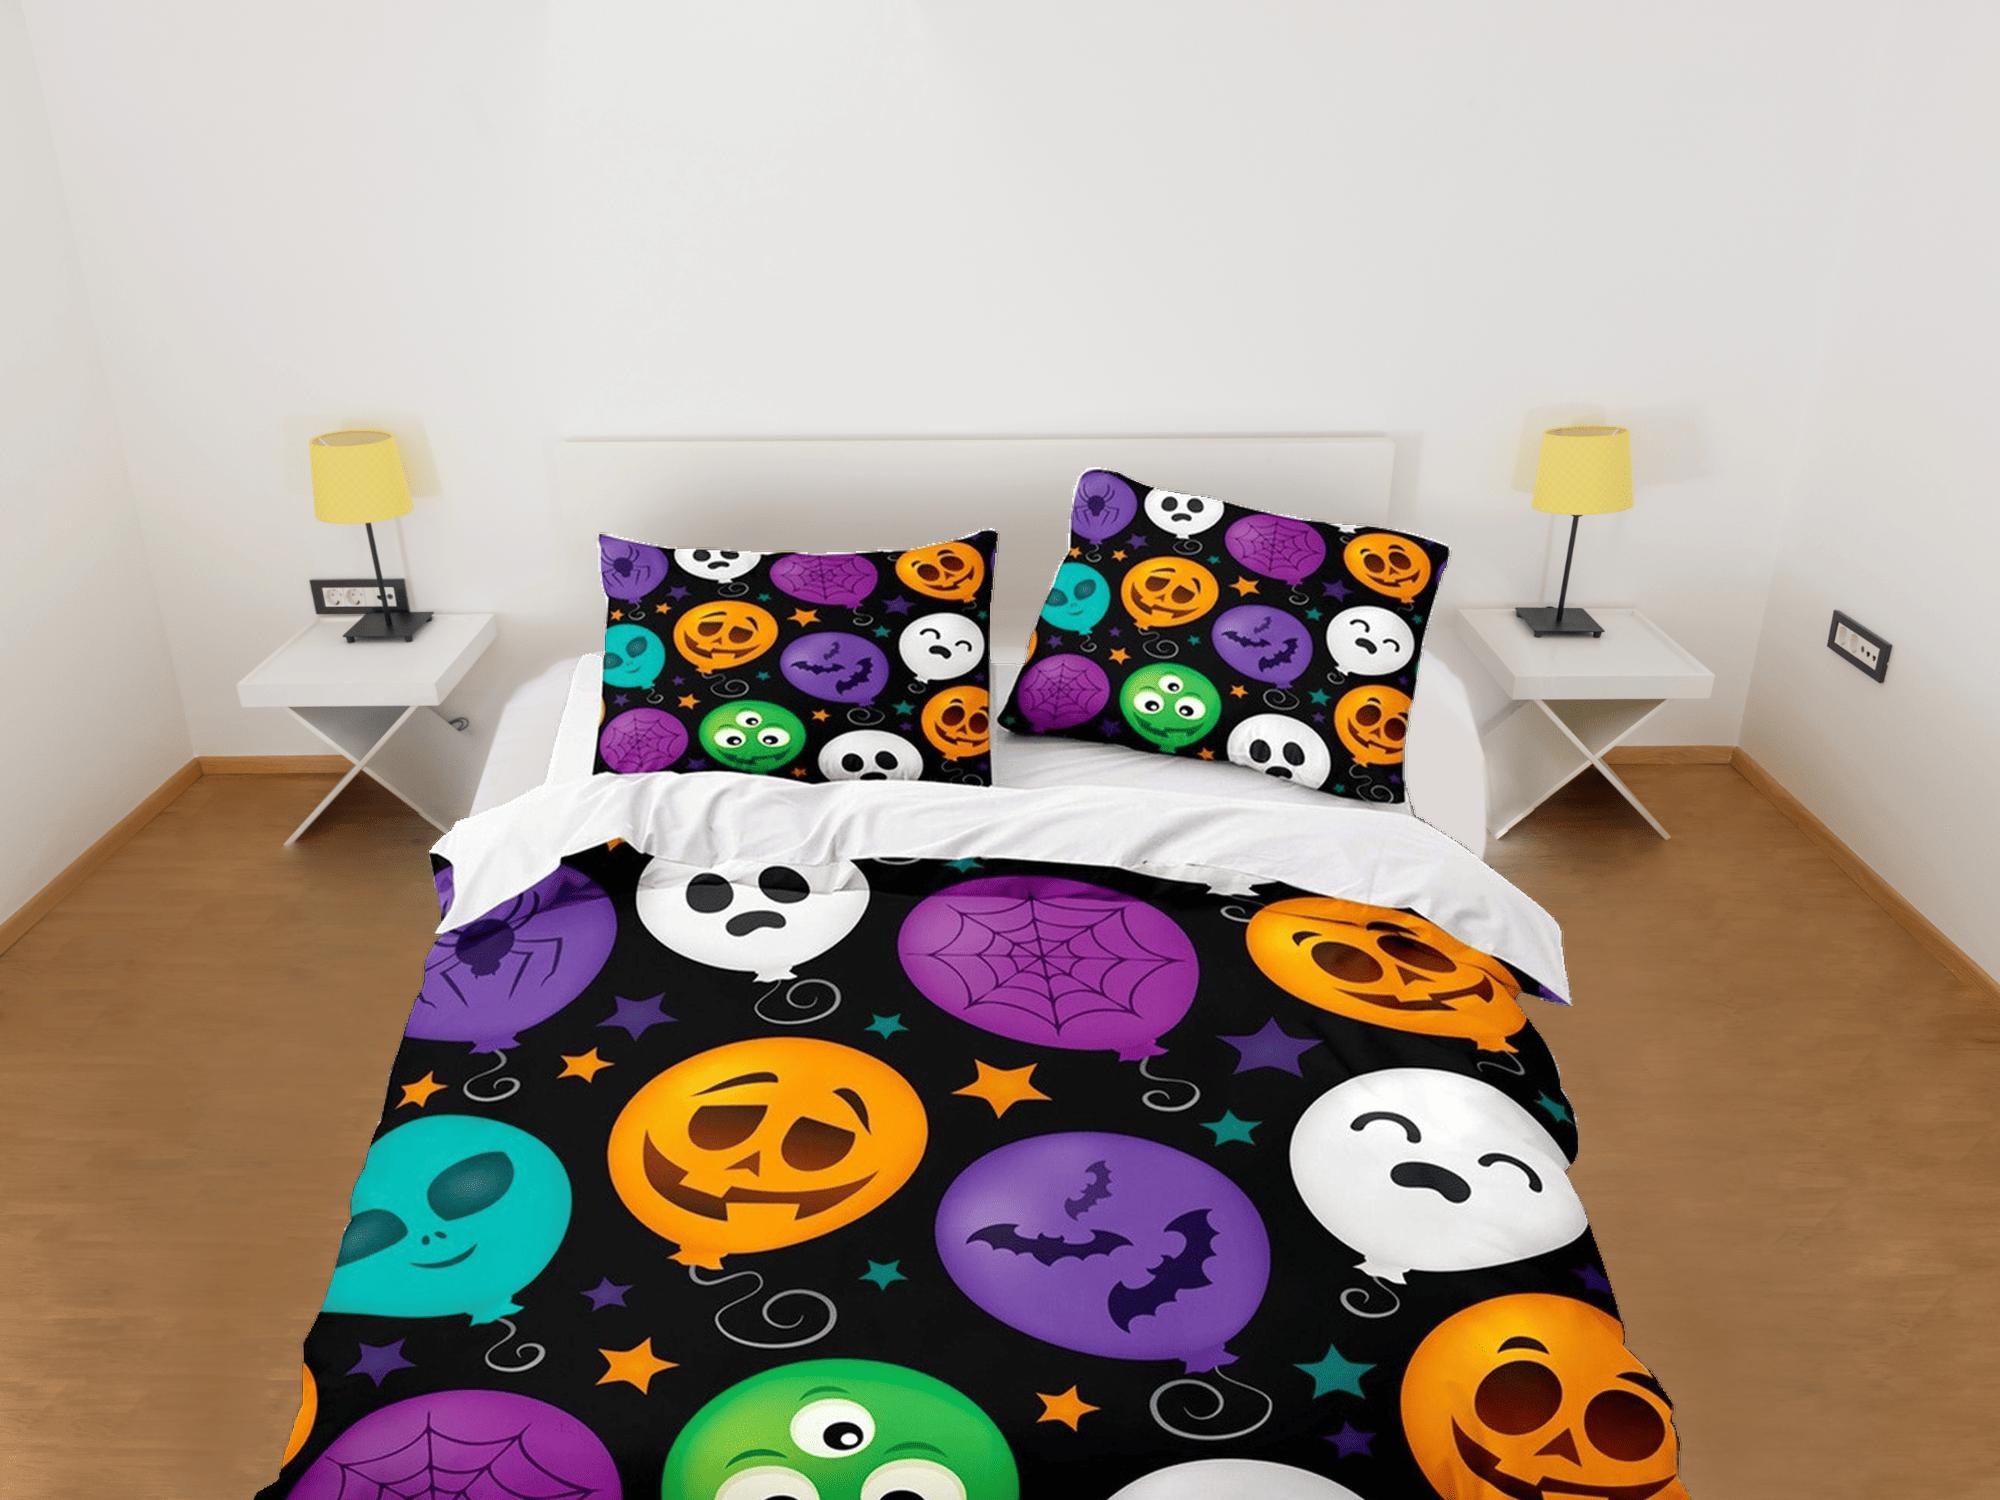 daintyduvet Colorful balloons pumpkin face halloween bedding & pillowcase, gothic duvet cover, dorm bedding, goth decor toddler bedding, halloween gift